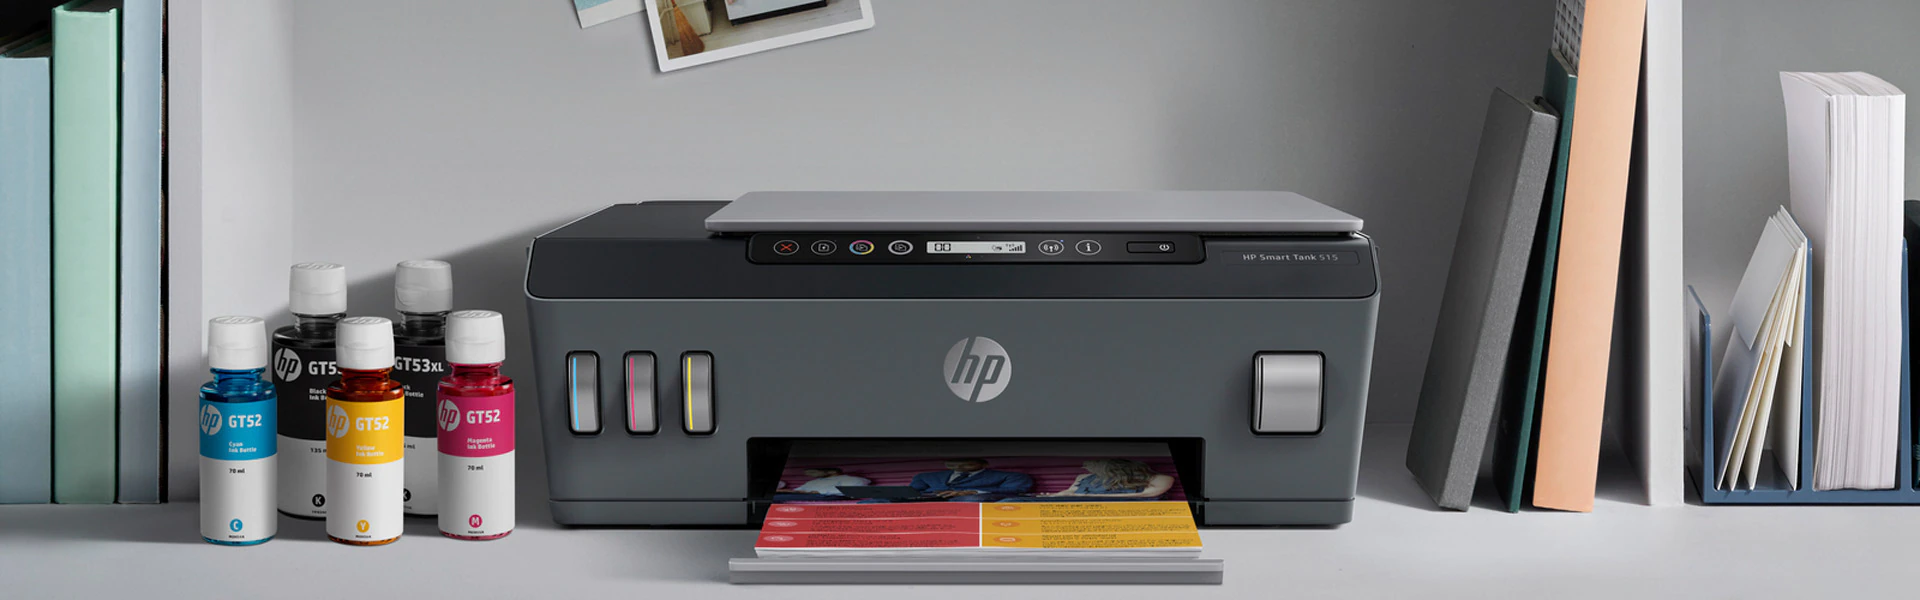 HP Printer Home Ink